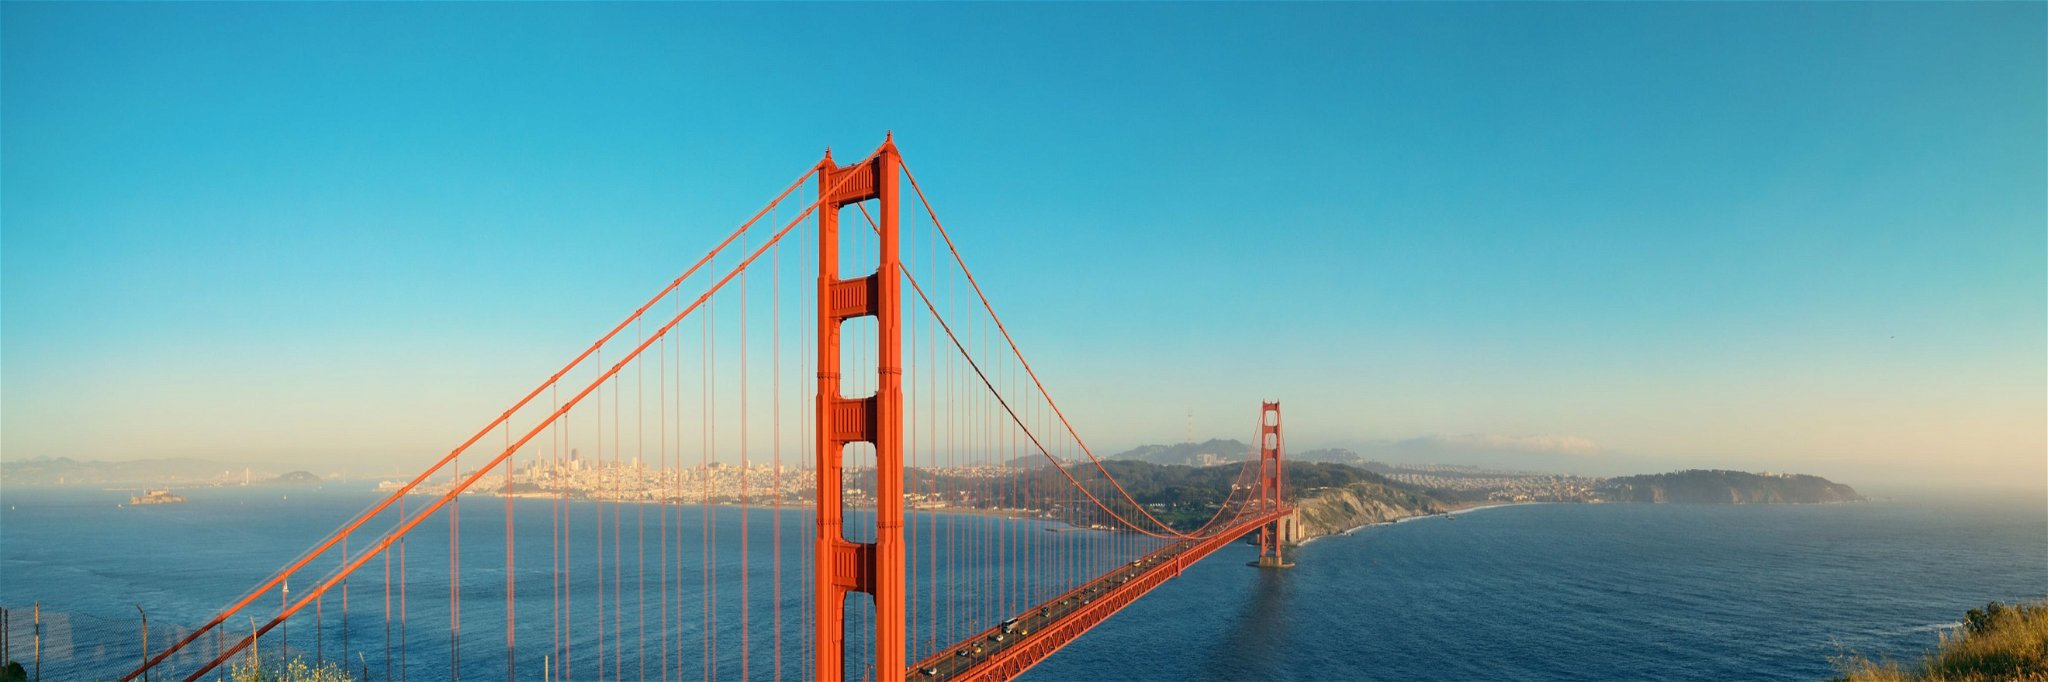 Stunning view of the Golden Gate bridge